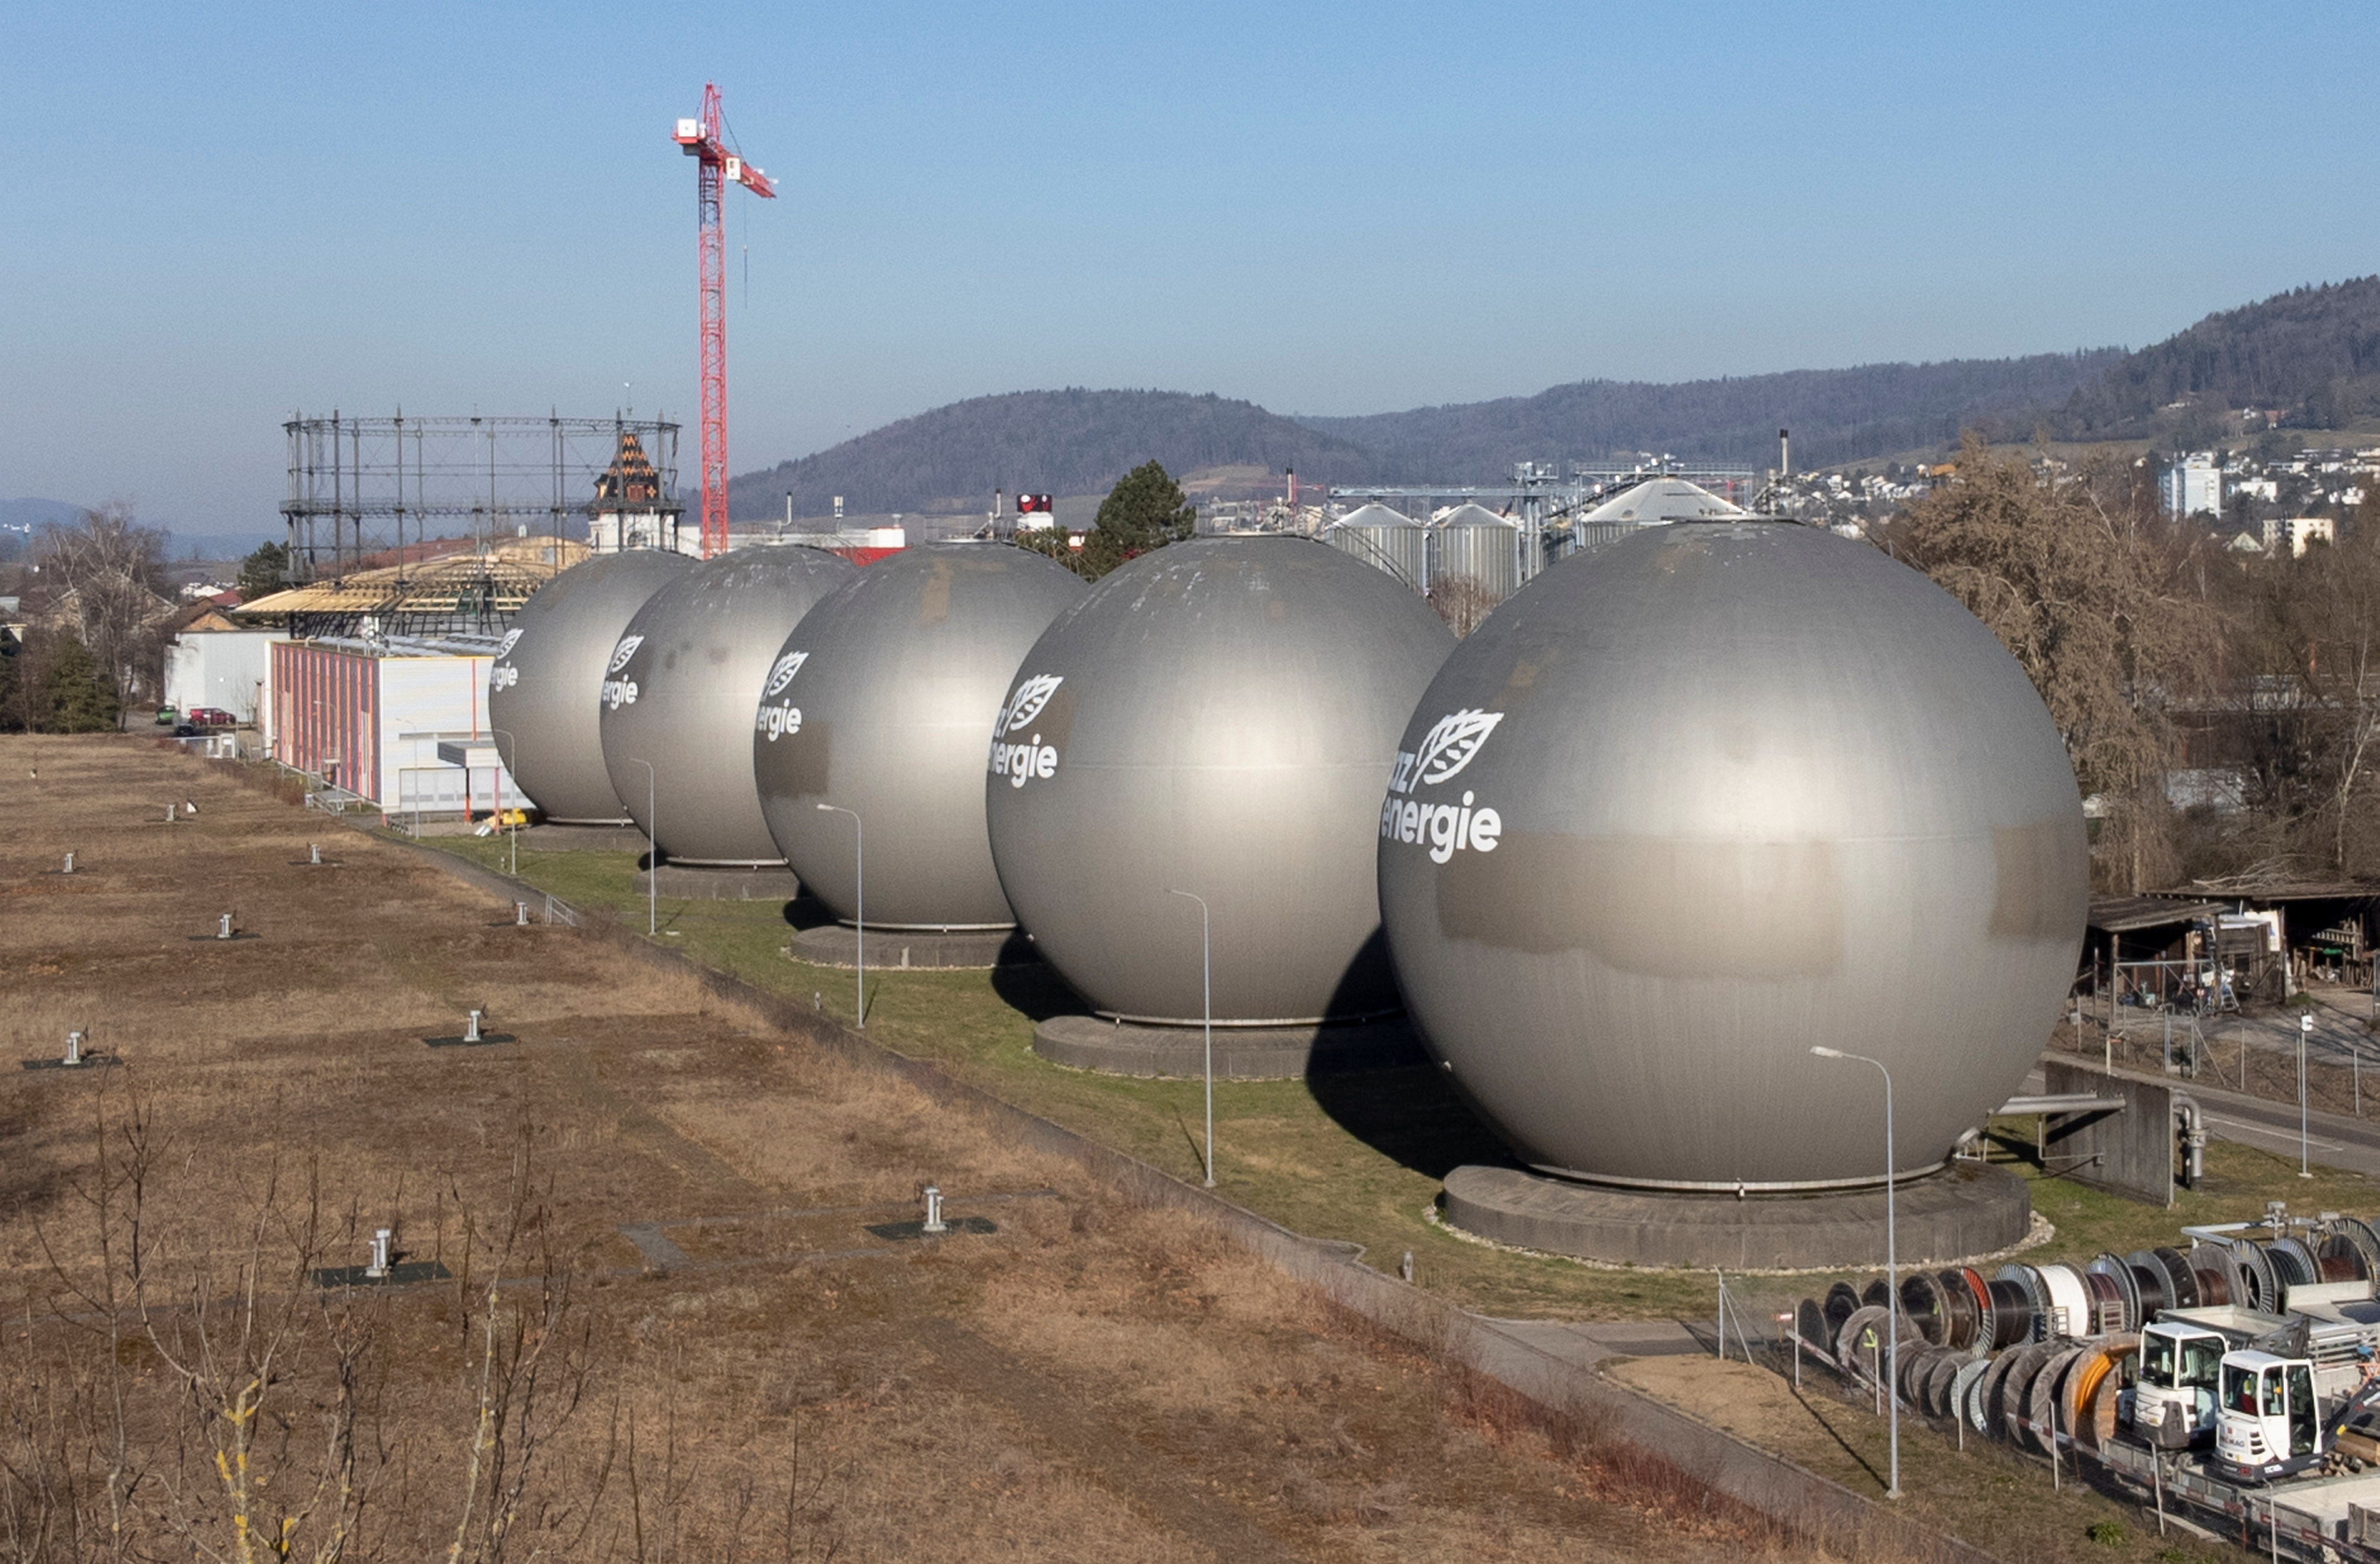 Tanks are seen at a storage facility of Erdgas Ostschweiz AG company in Schlieren